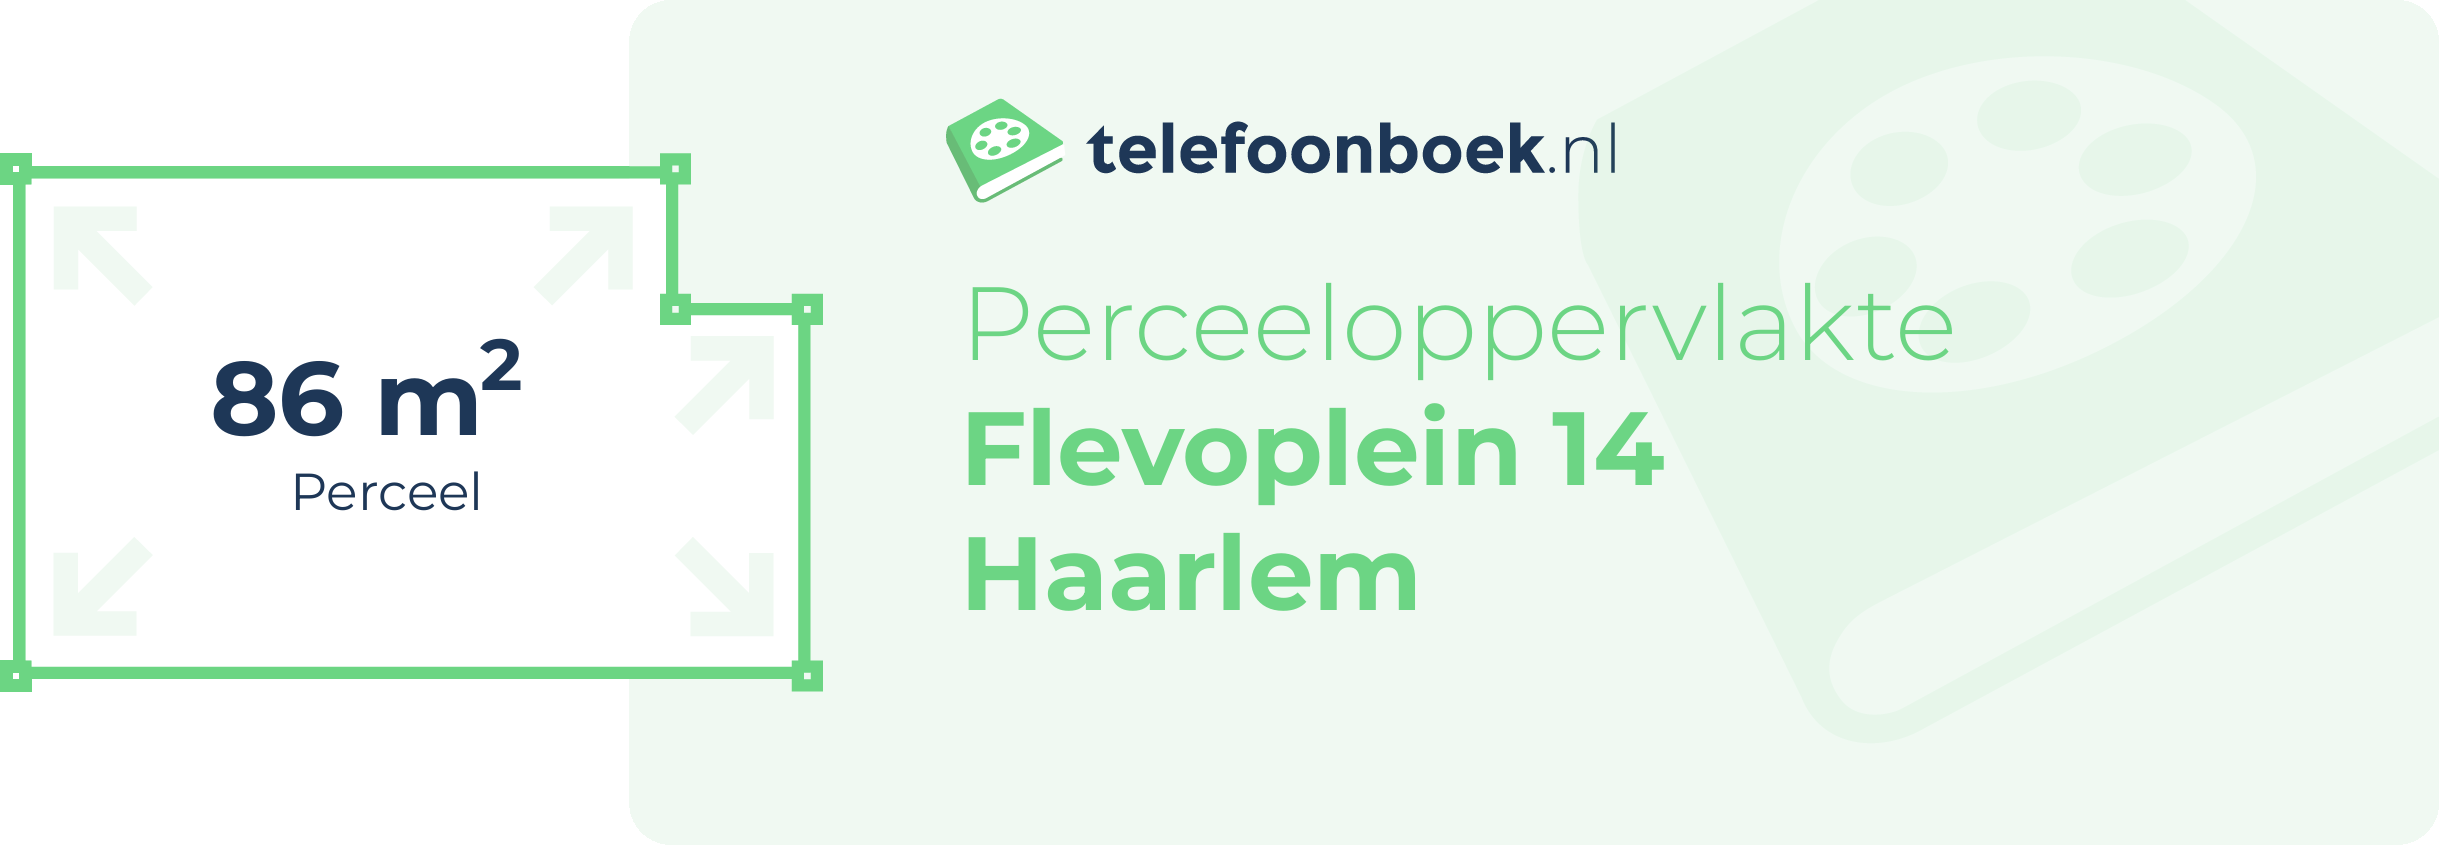 Perceeloppervlakte Flevoplein 14 Haarlem